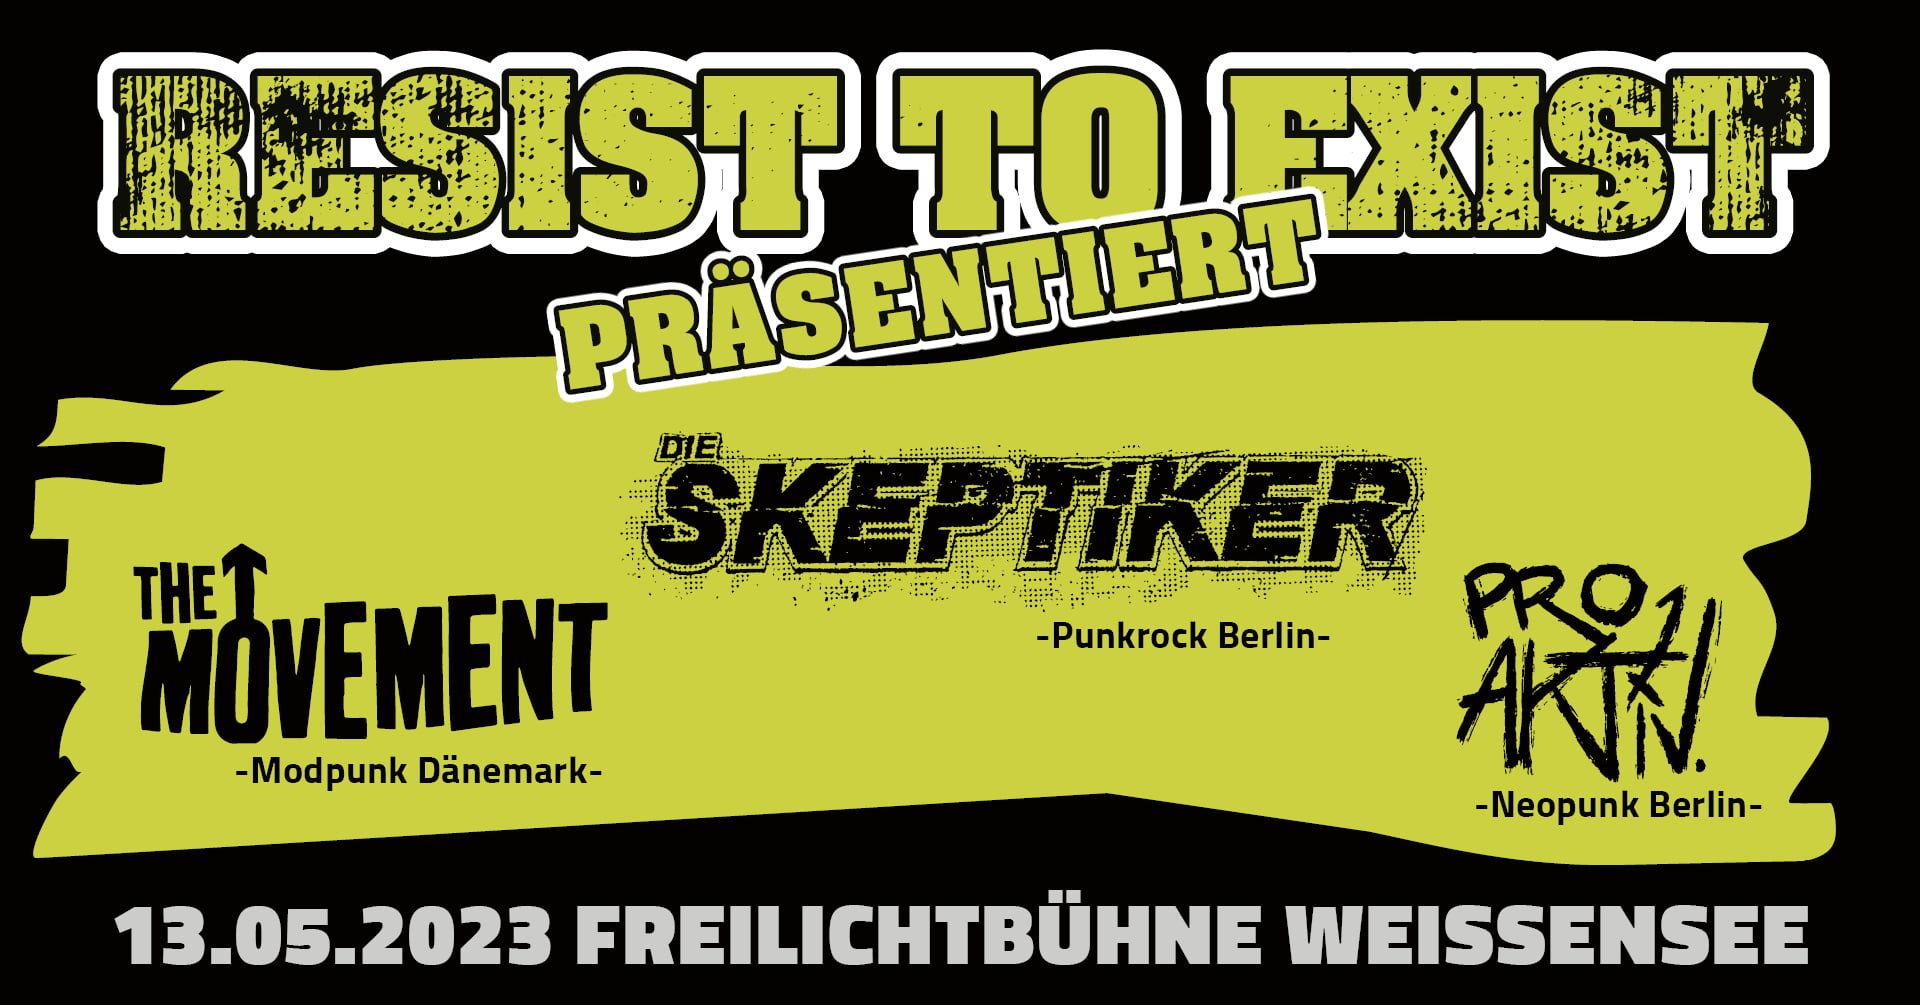 Resist to Exist präsentiert: Die Skeptiker, The Movement, ProAktiv